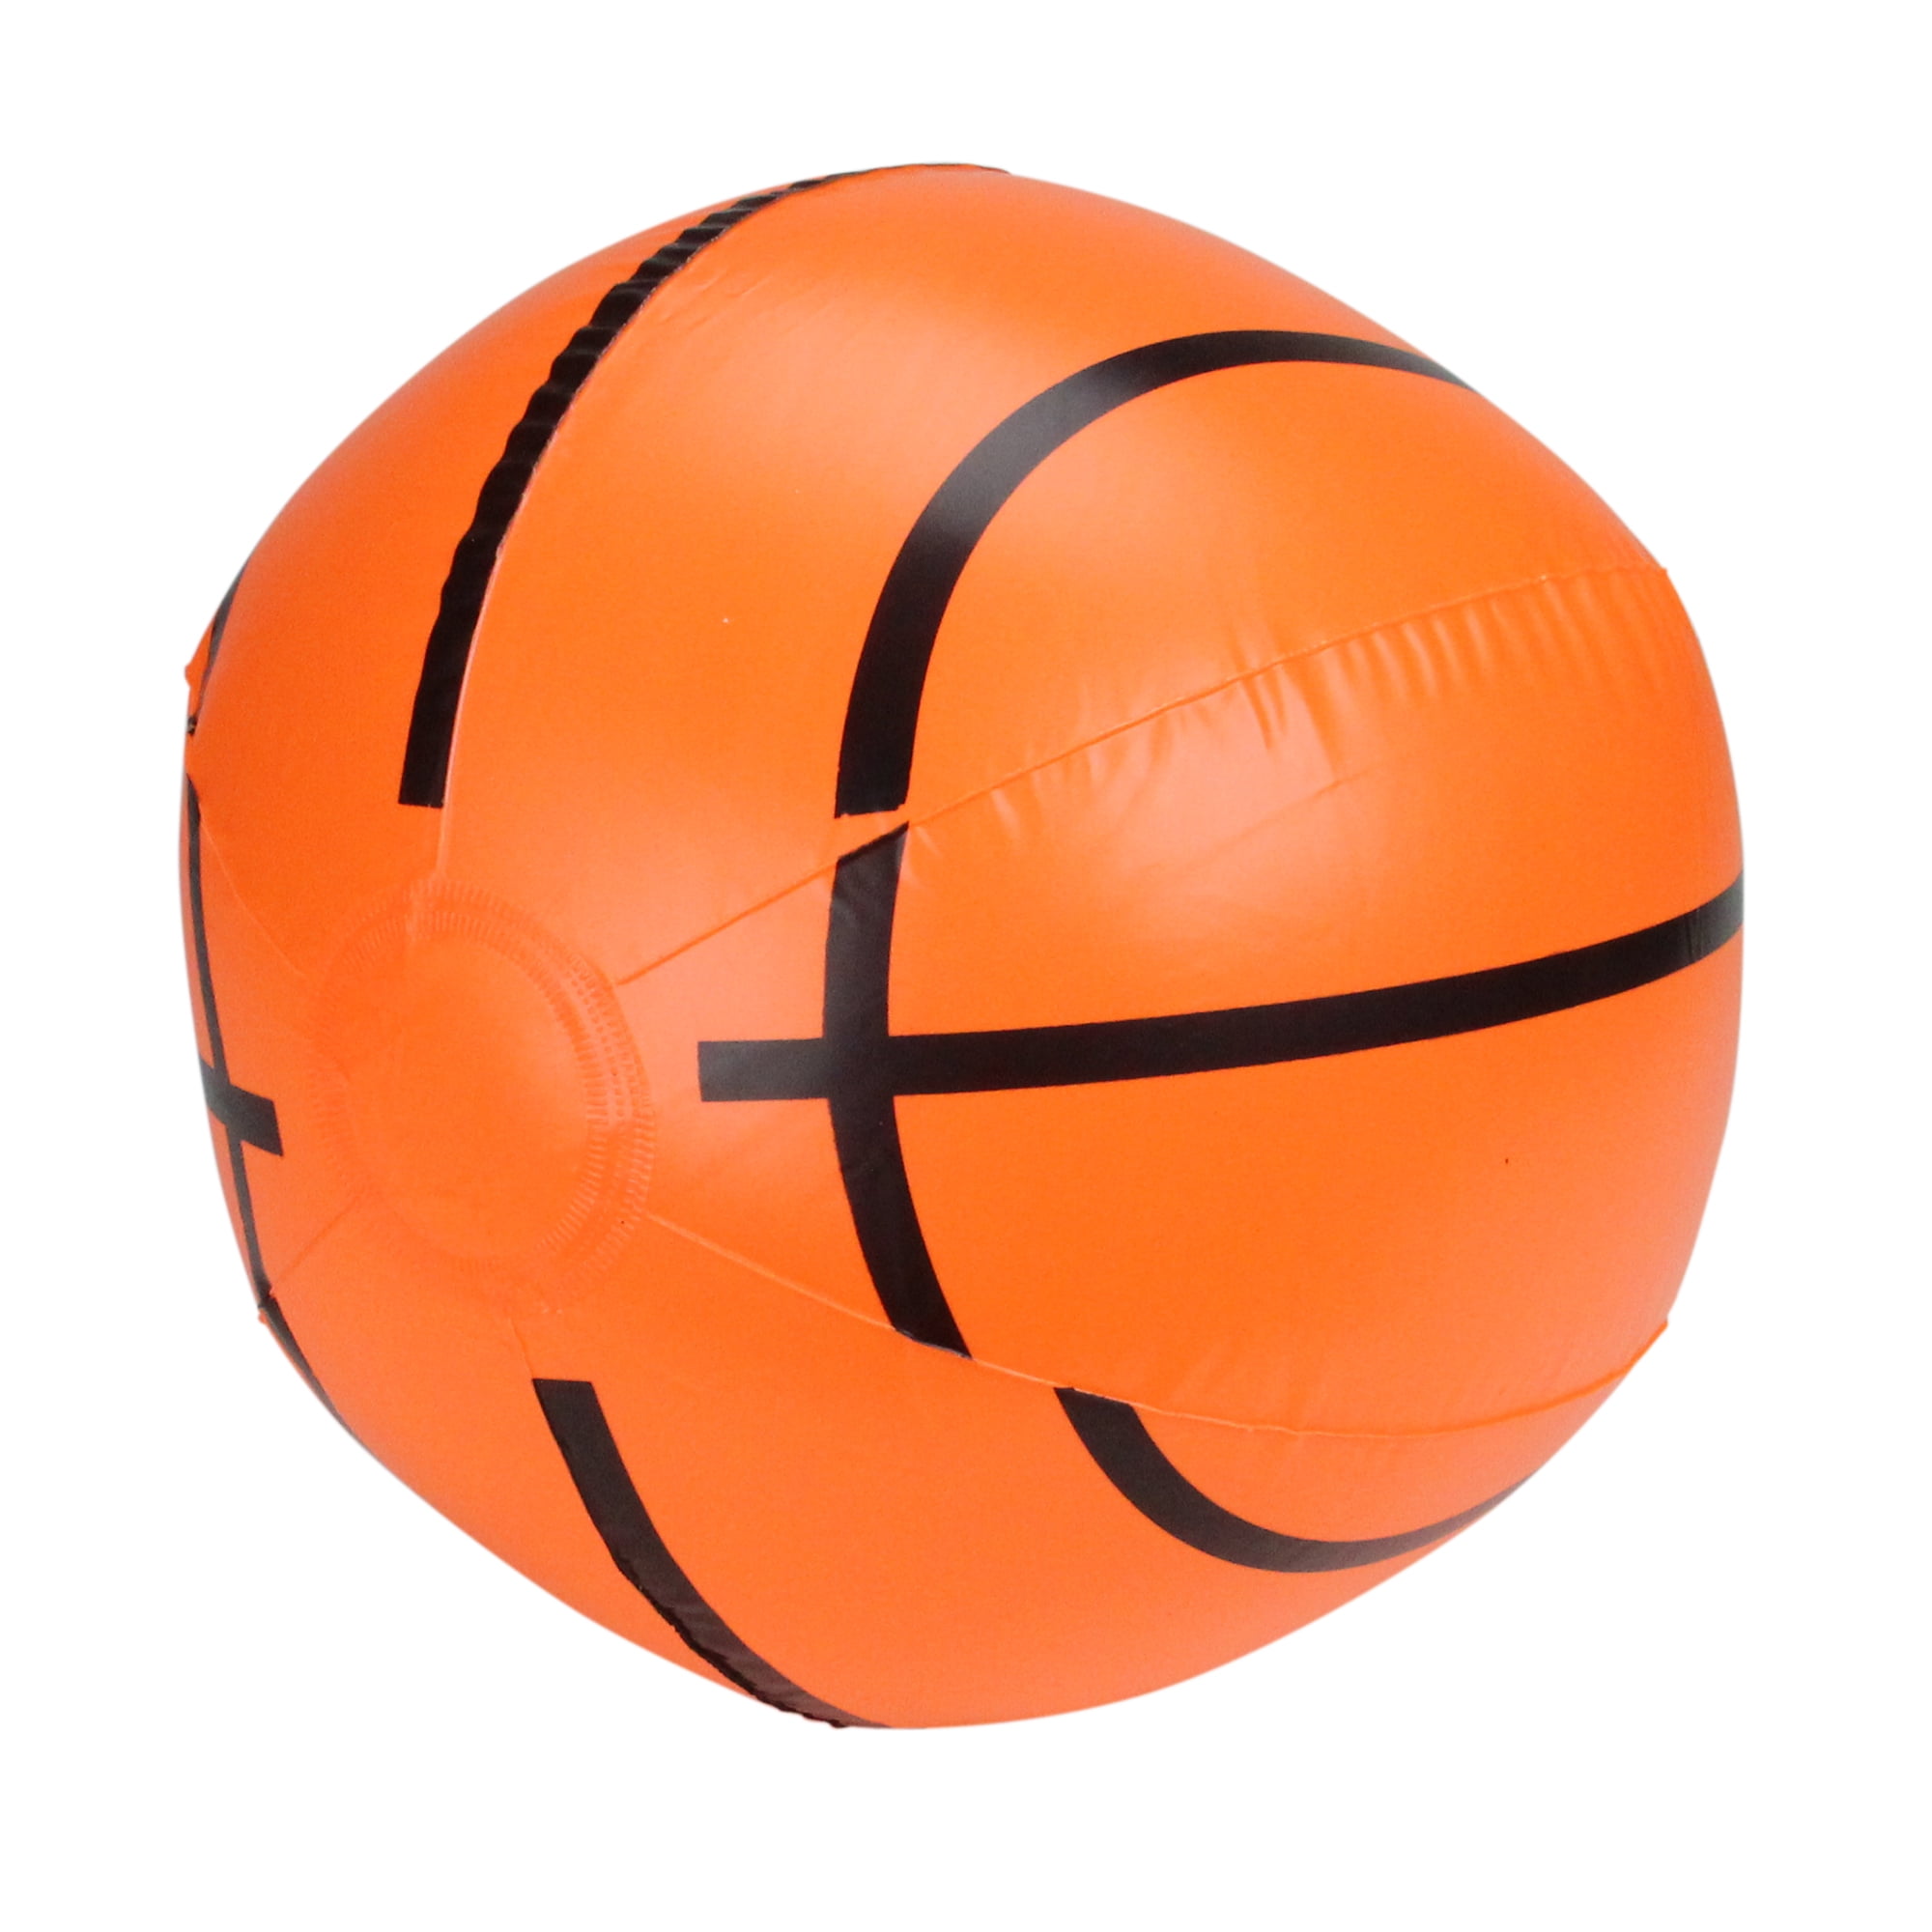 16cm inflatable basketball volleyball beach ball kids sports toy random coh3 